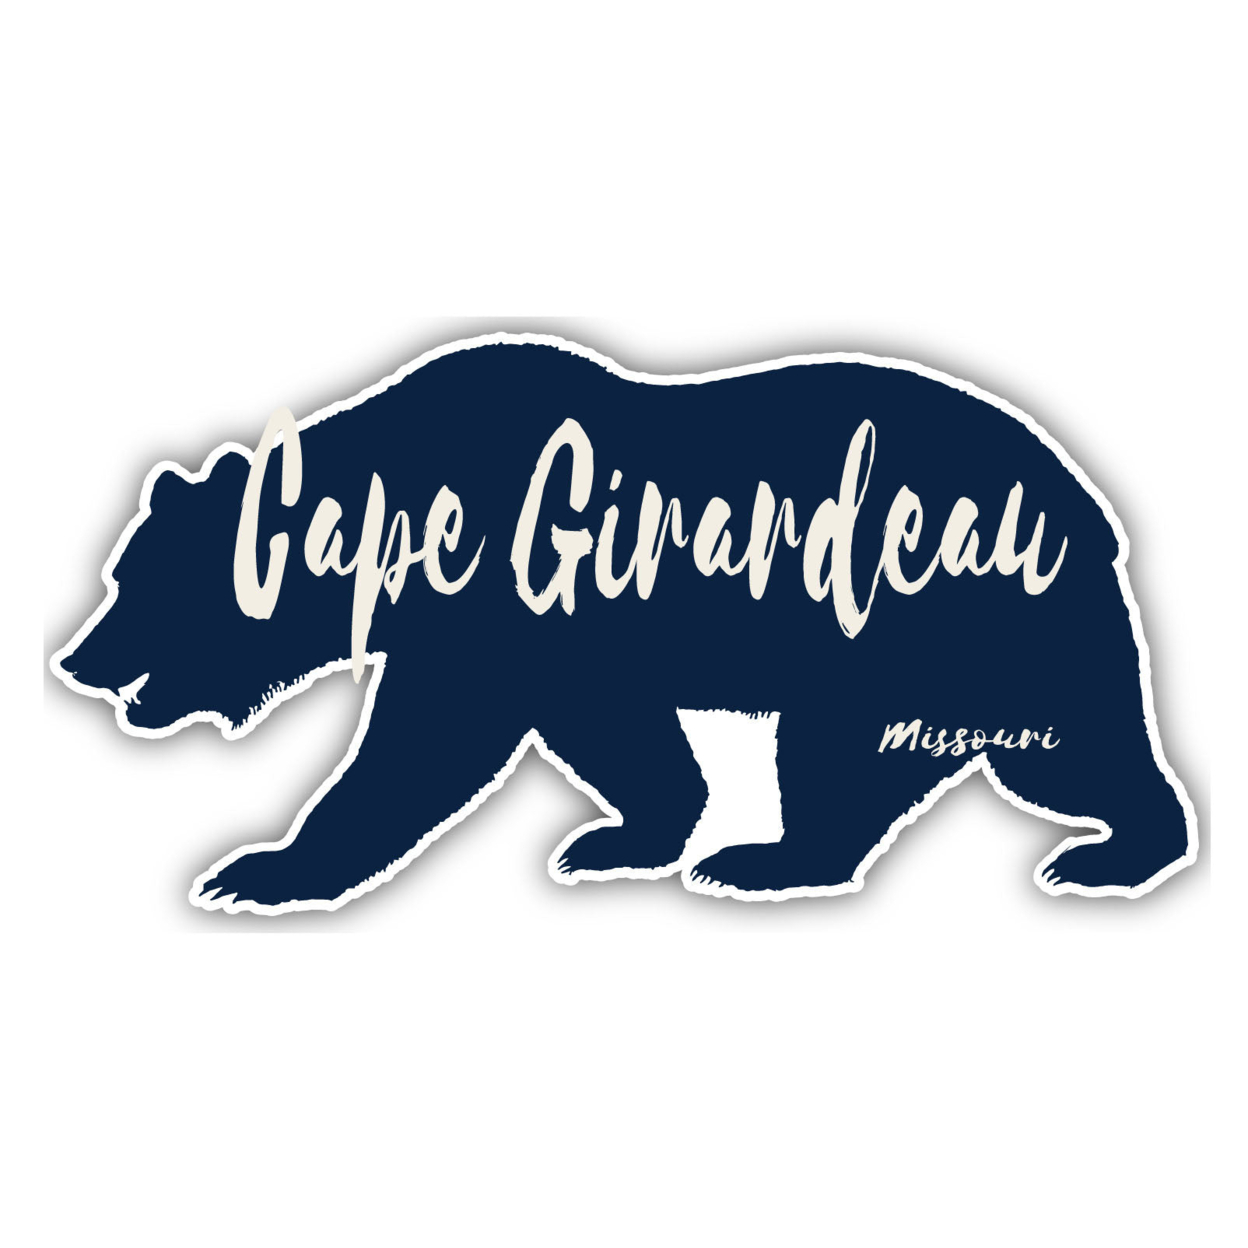 Cape Girardeau Missouri Souvenir Decorative Stickers (Choose Theme And Size) - Single Unit, 6-Inch, Bear